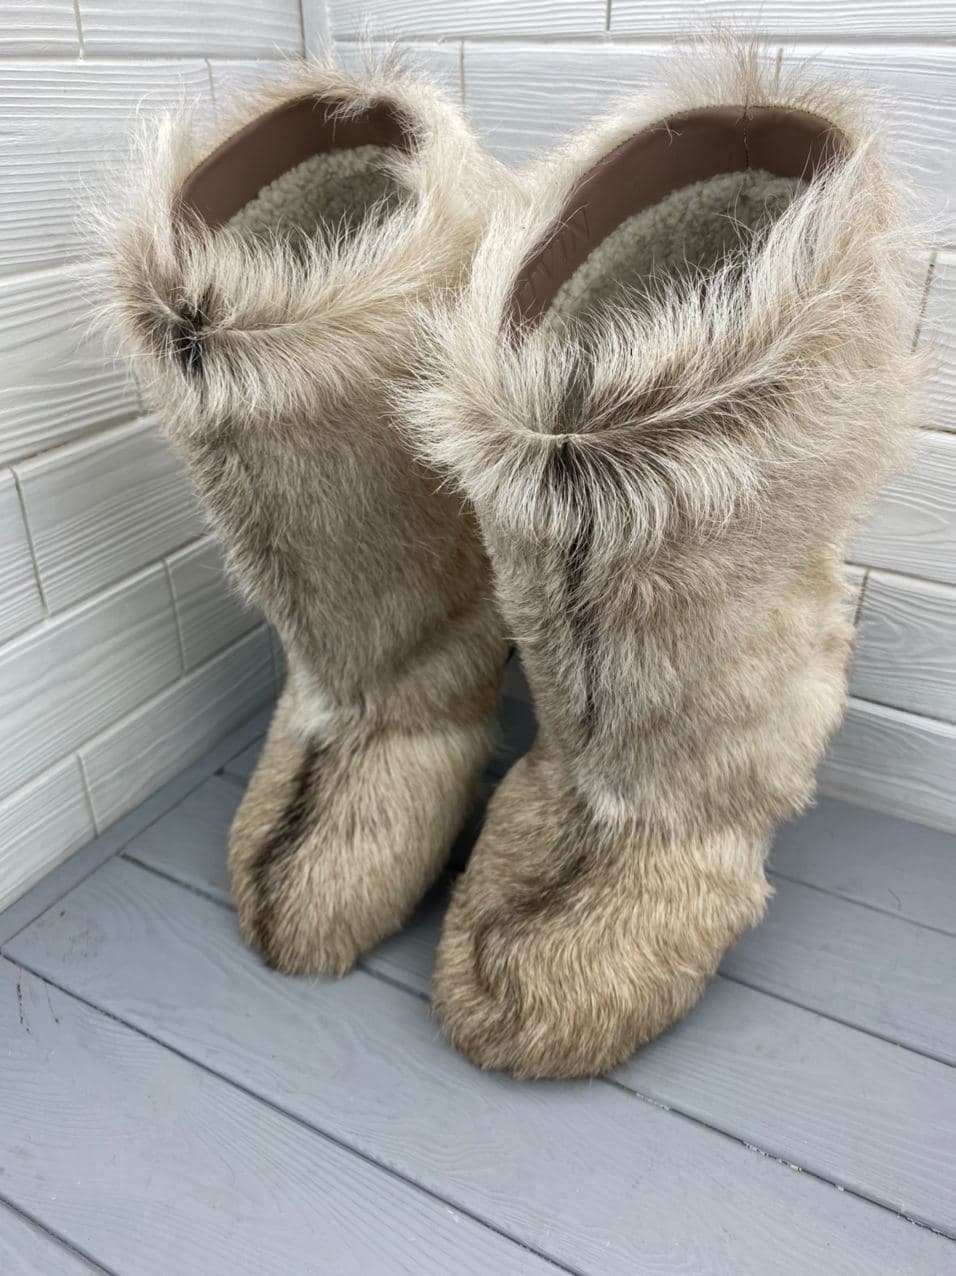 Russian Fur Insoles 100% Natural SheepskinWinter WoolWarm & Dry Feet 